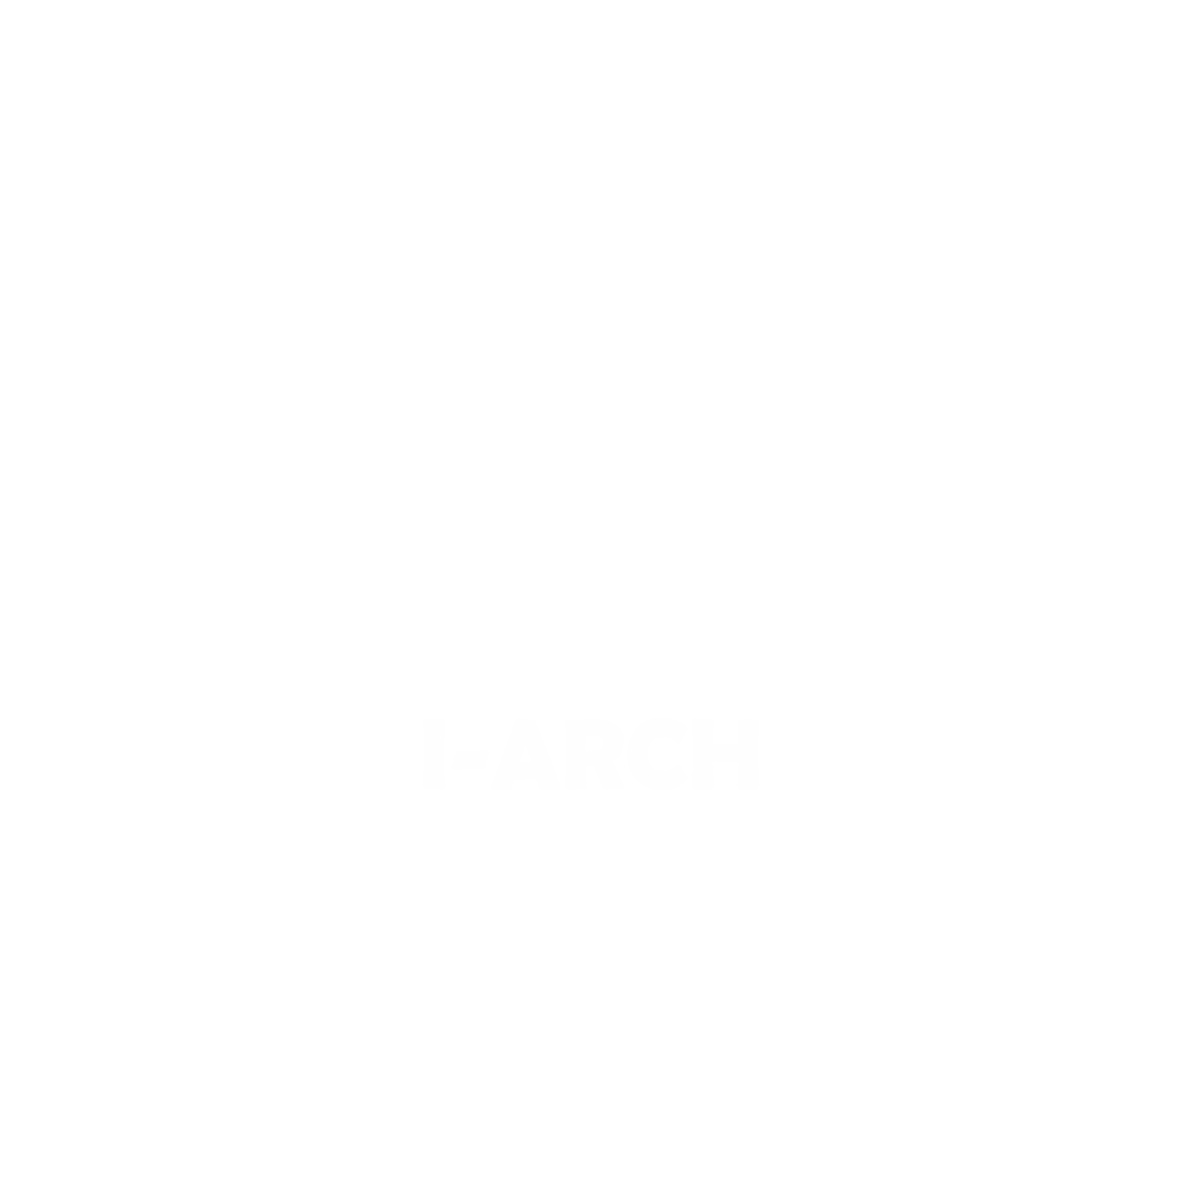 I-ARCH Architect